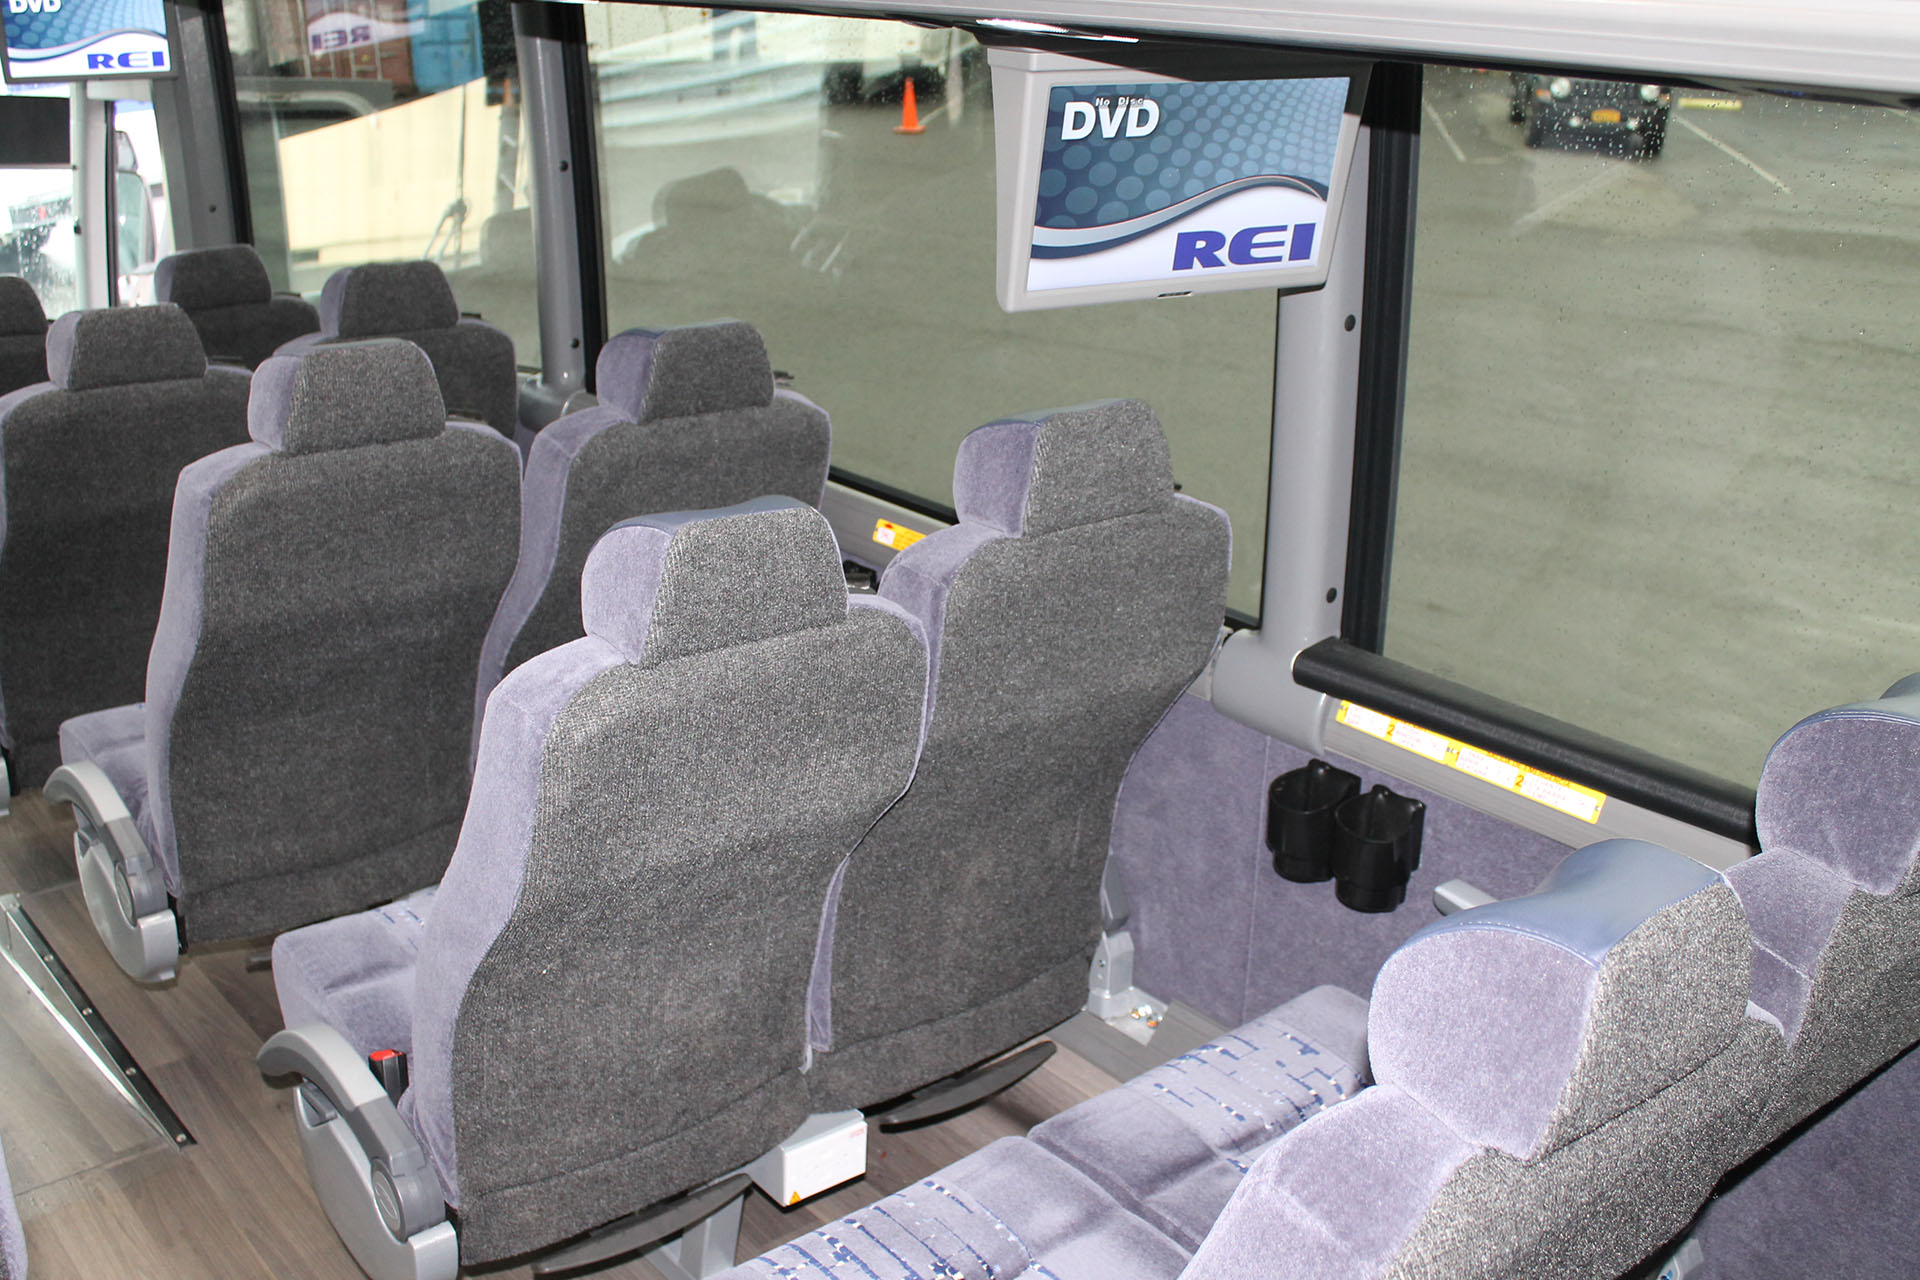 Seats and DVD player inside a 54 passenger motorcoach